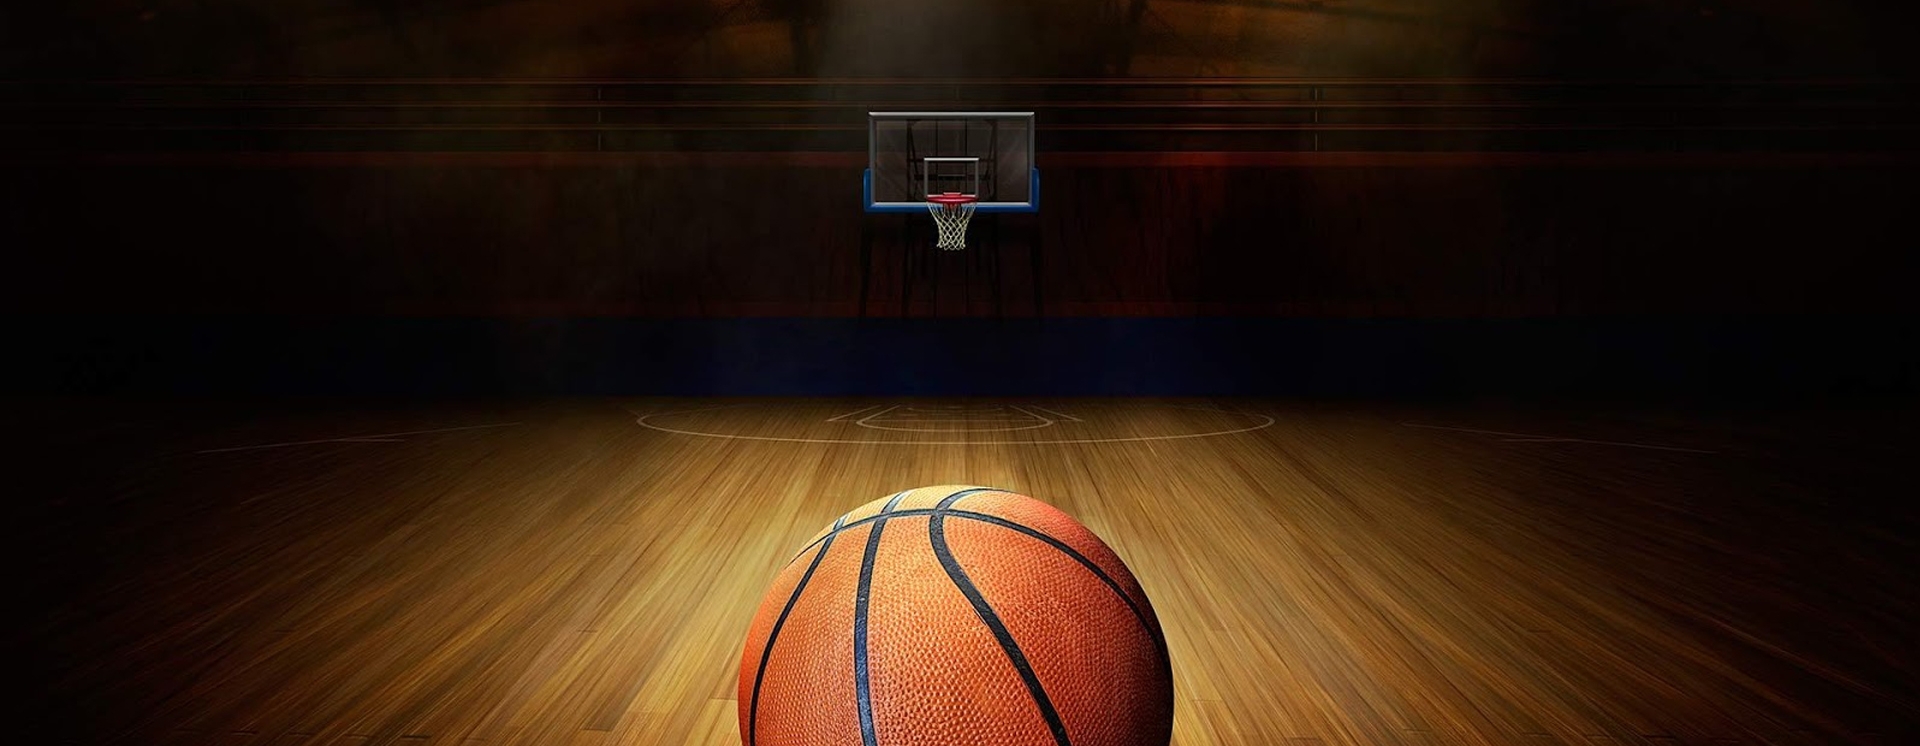 Basket League 2015-16 by Gazzetta